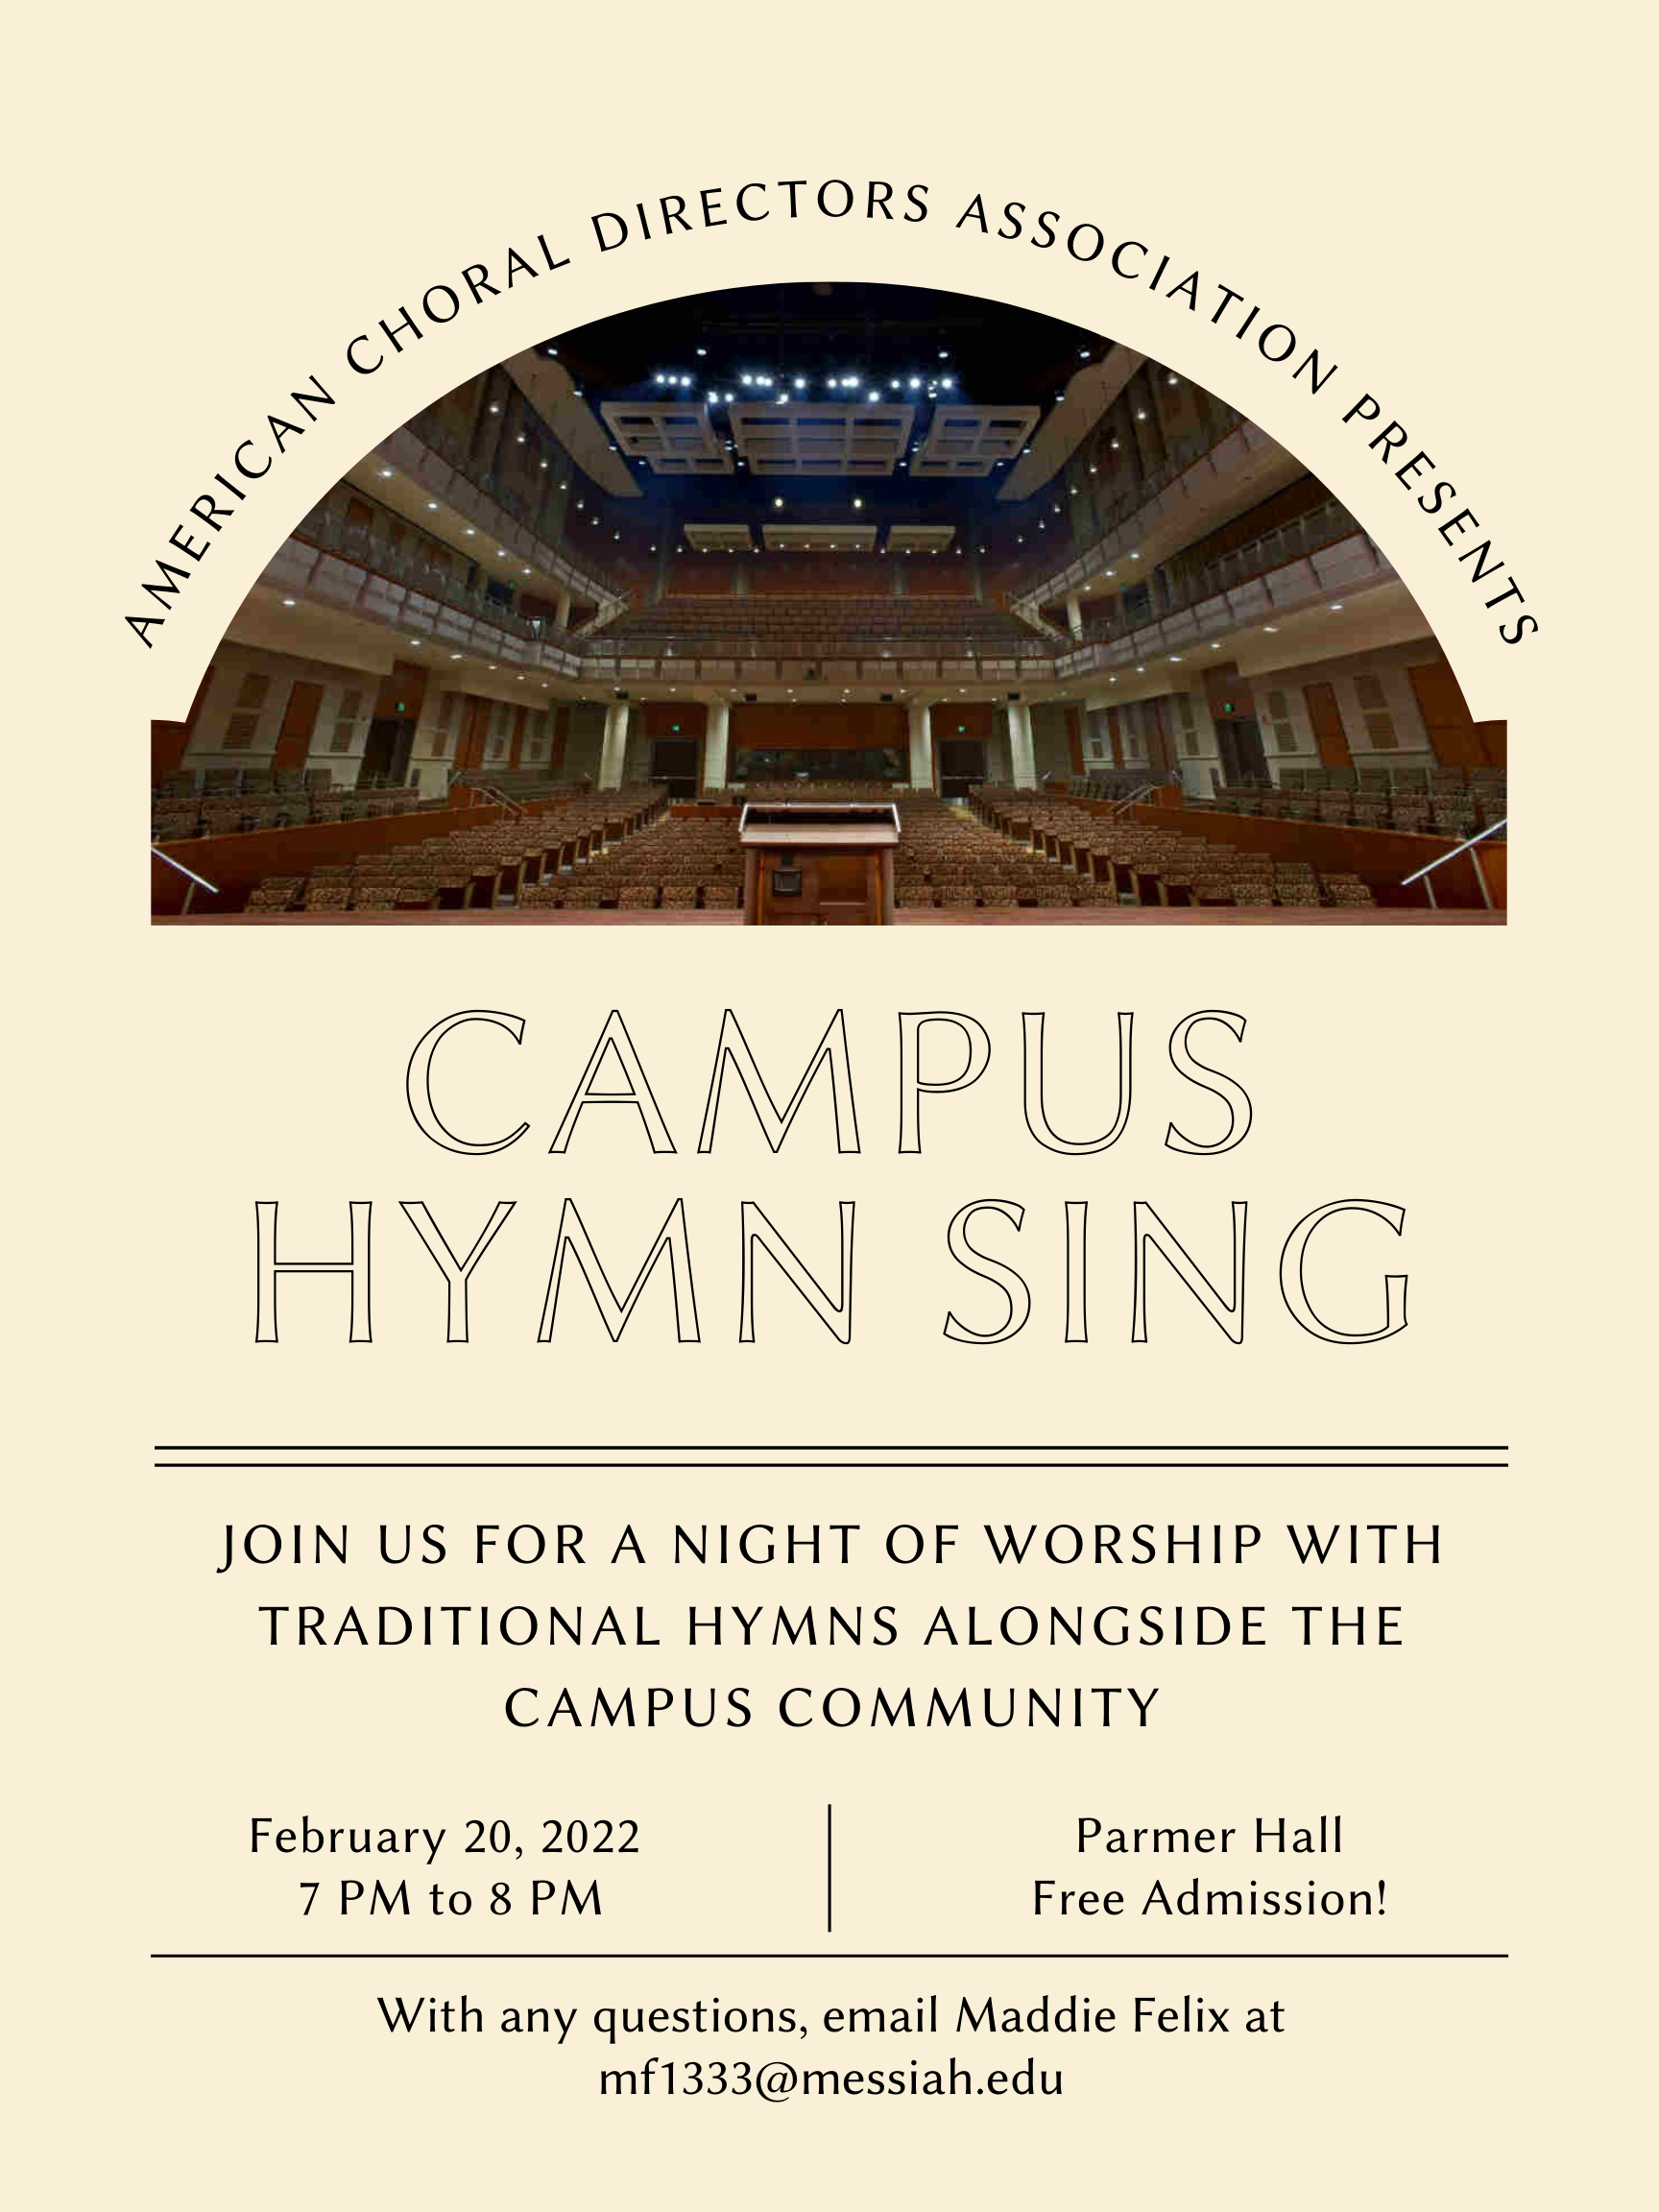 Campus hymn sing